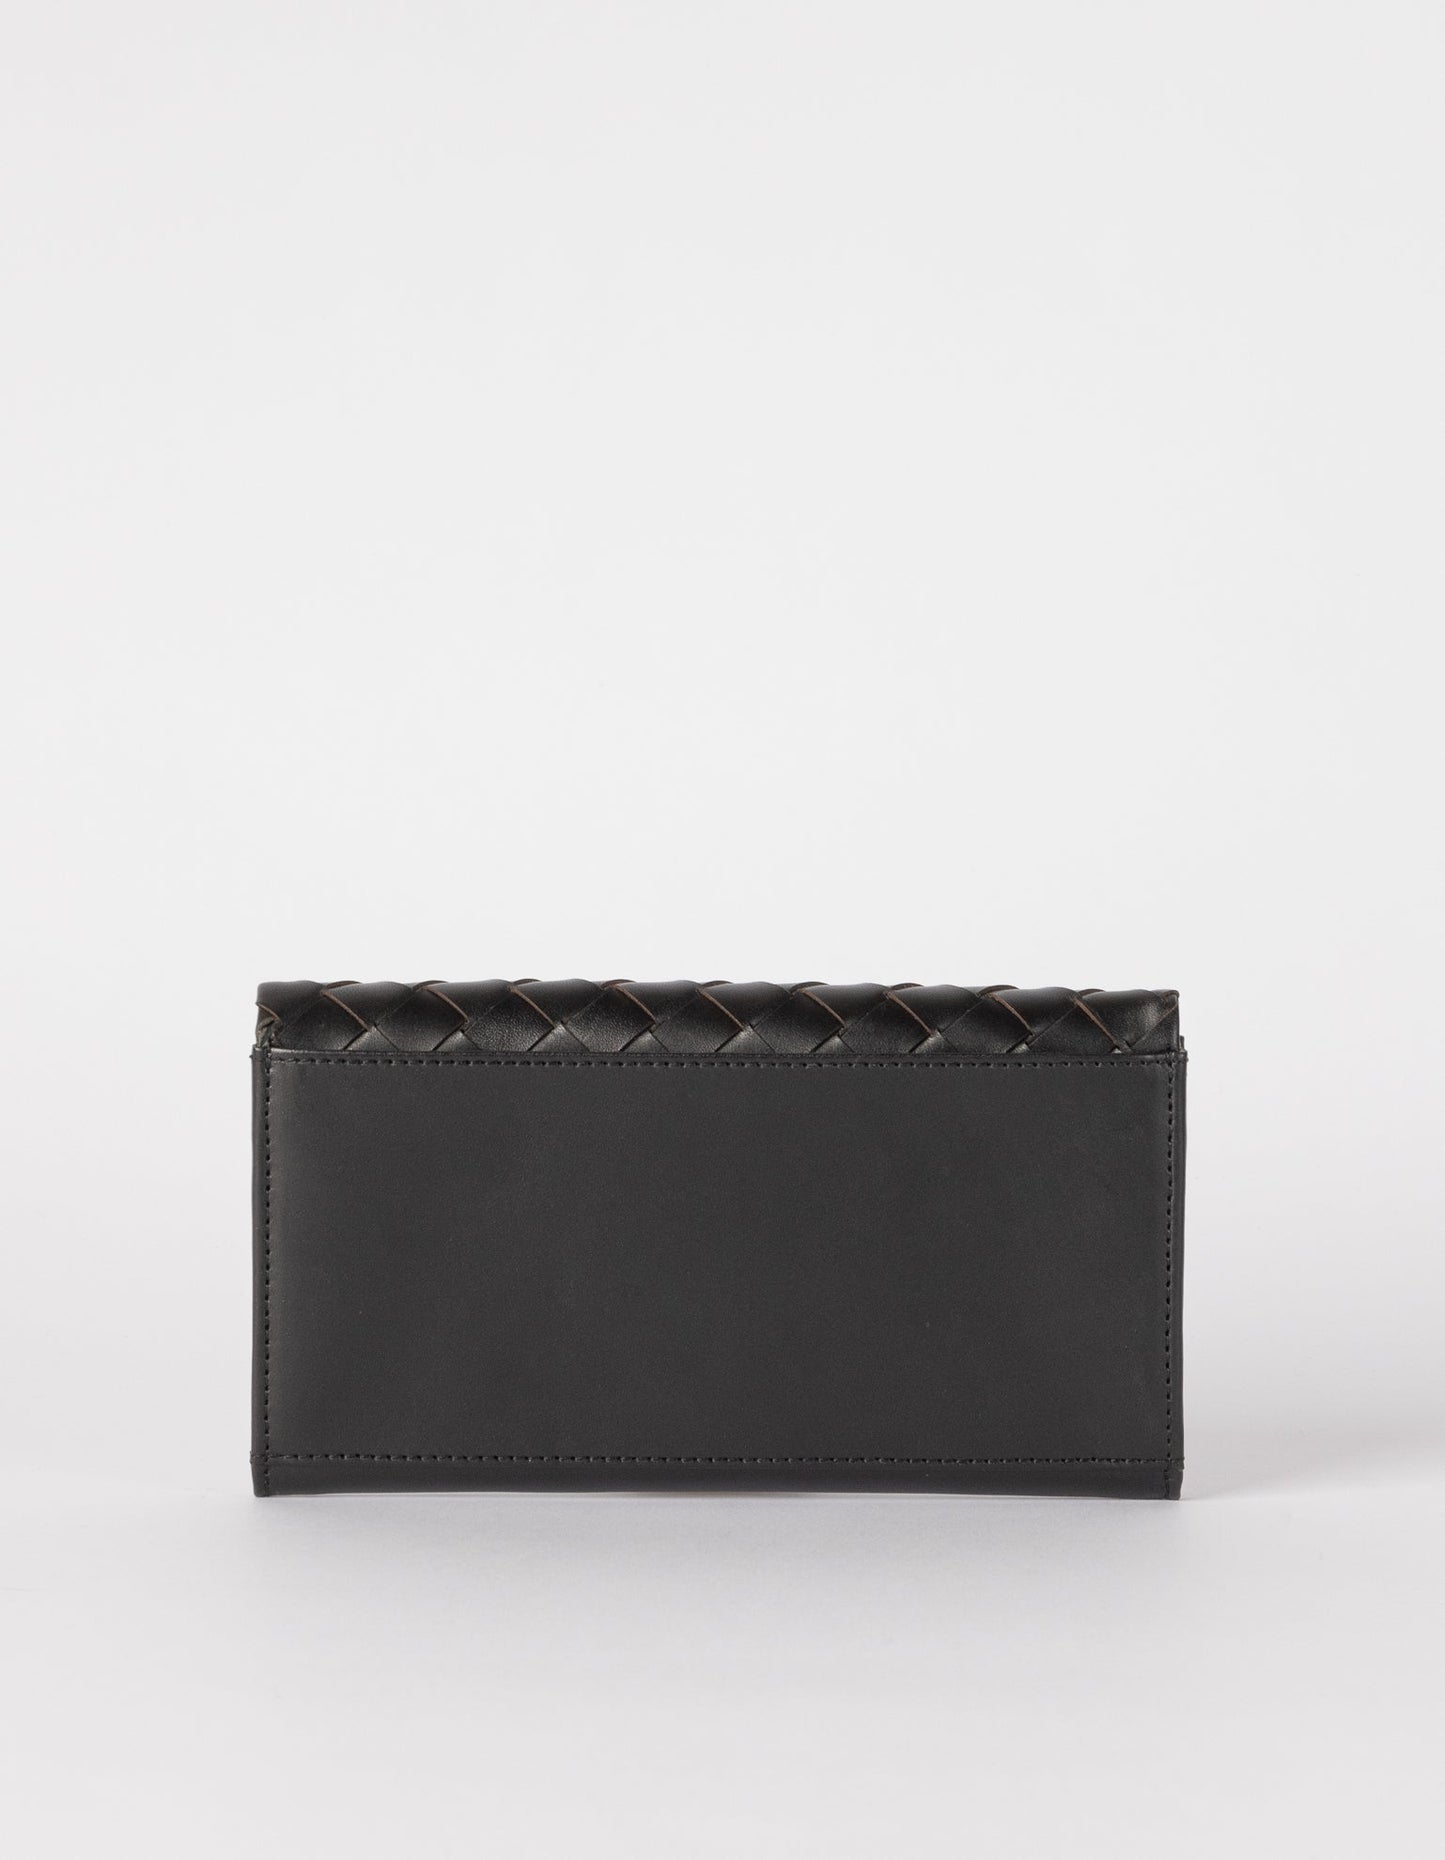 omybag - PAU'S POUCH Black Woven Classic Leather